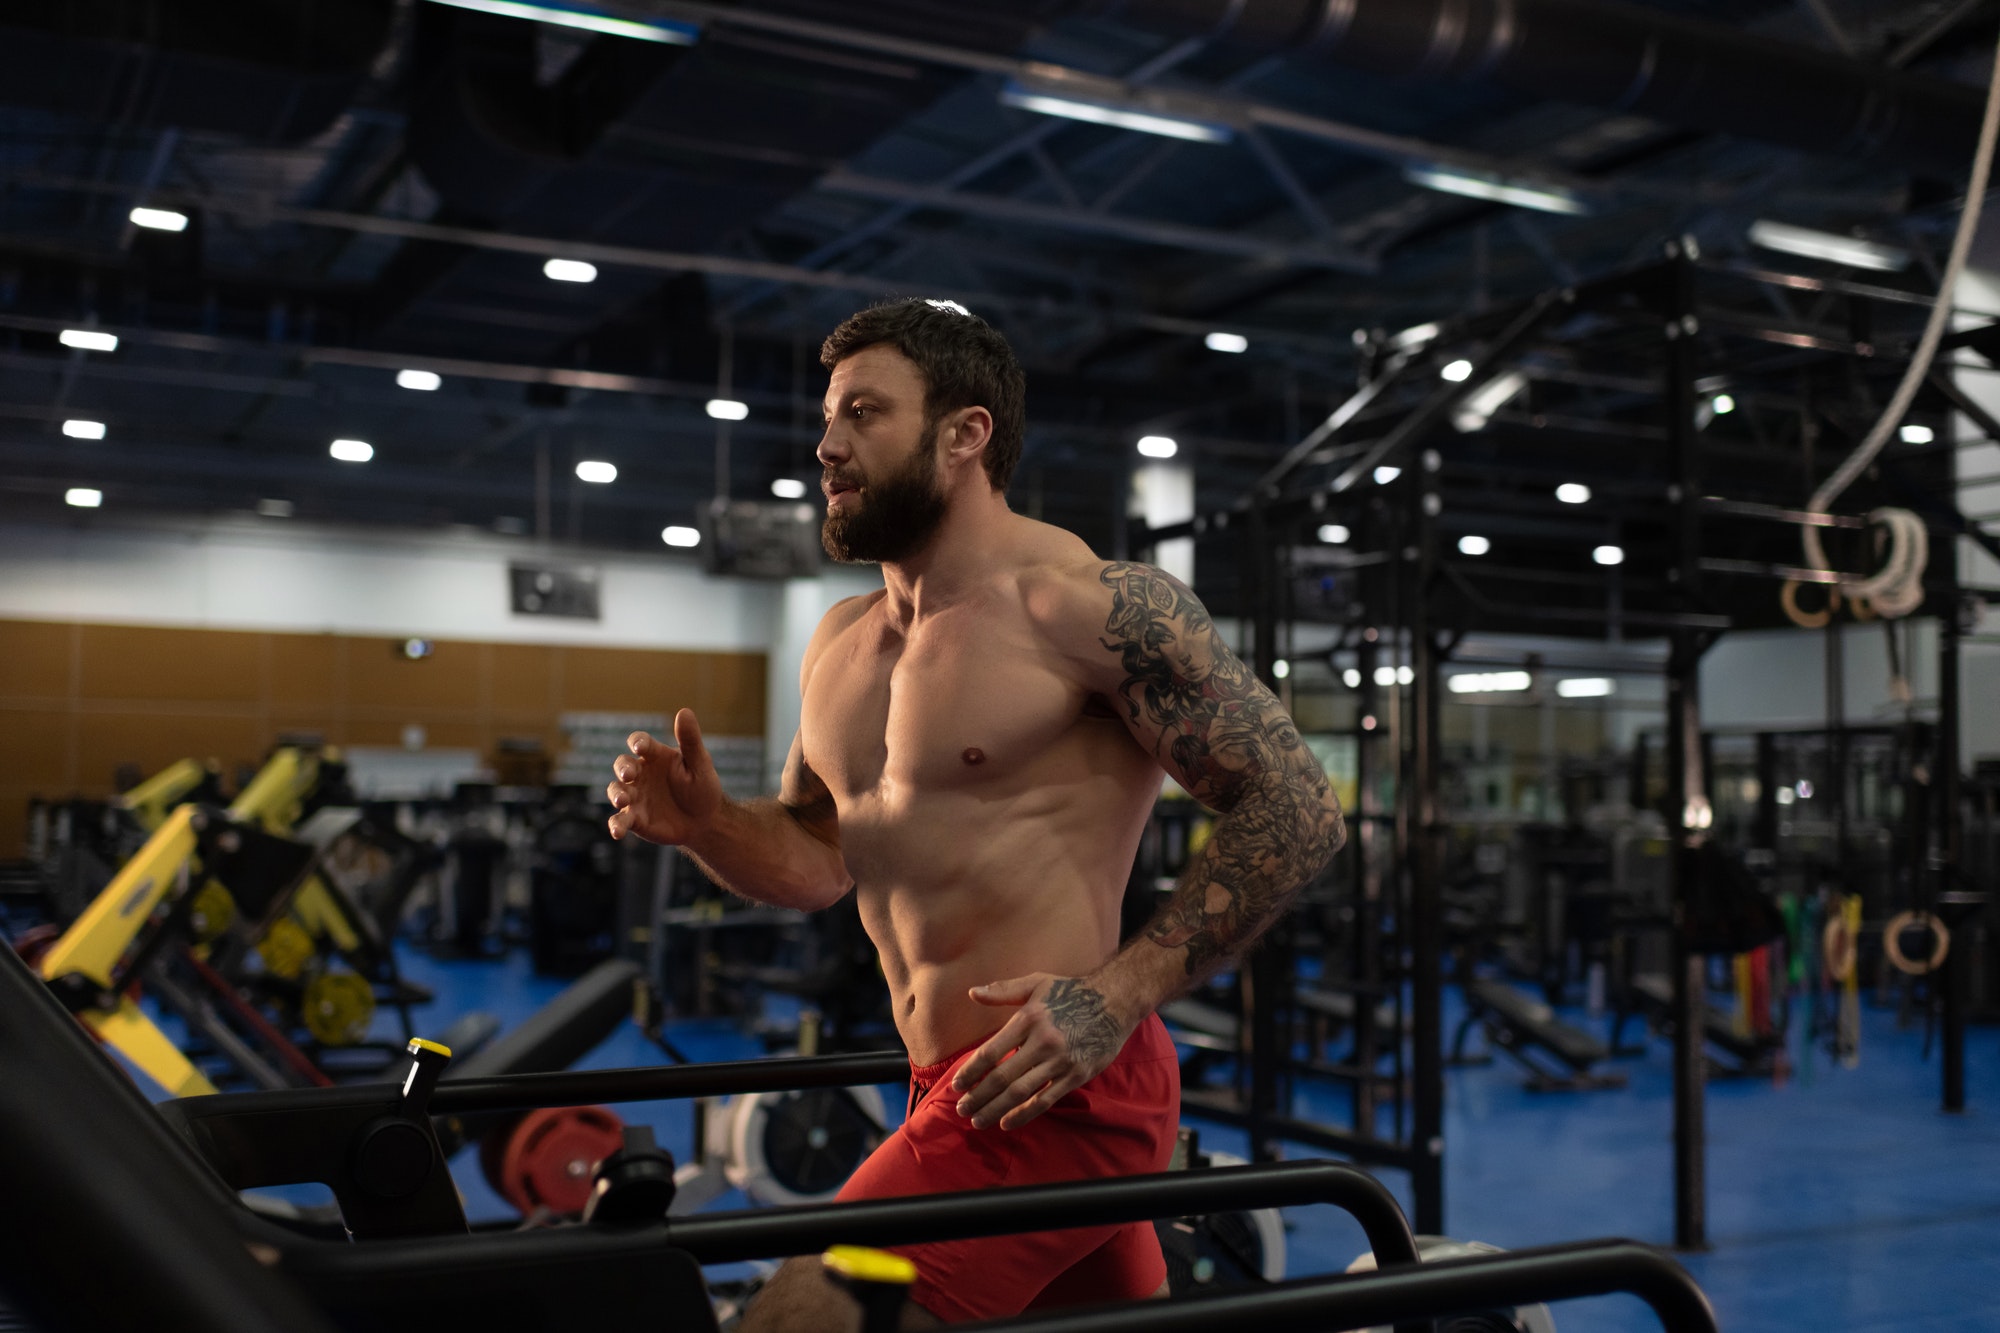 Strong male athlete running on modern treadmill